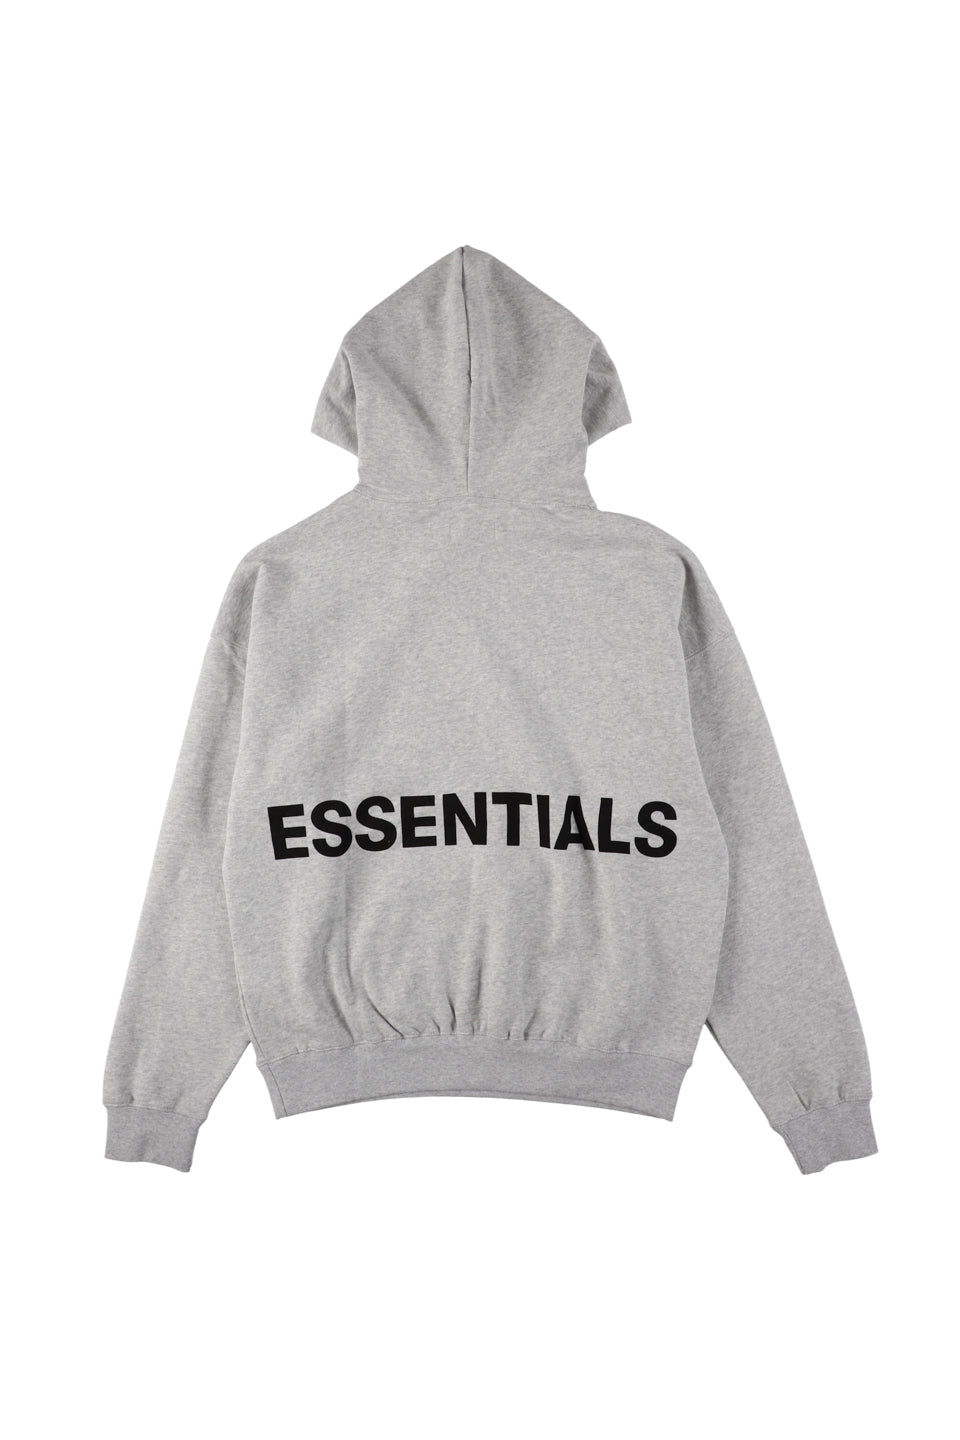 essentials Graphic Pullover Hoodie